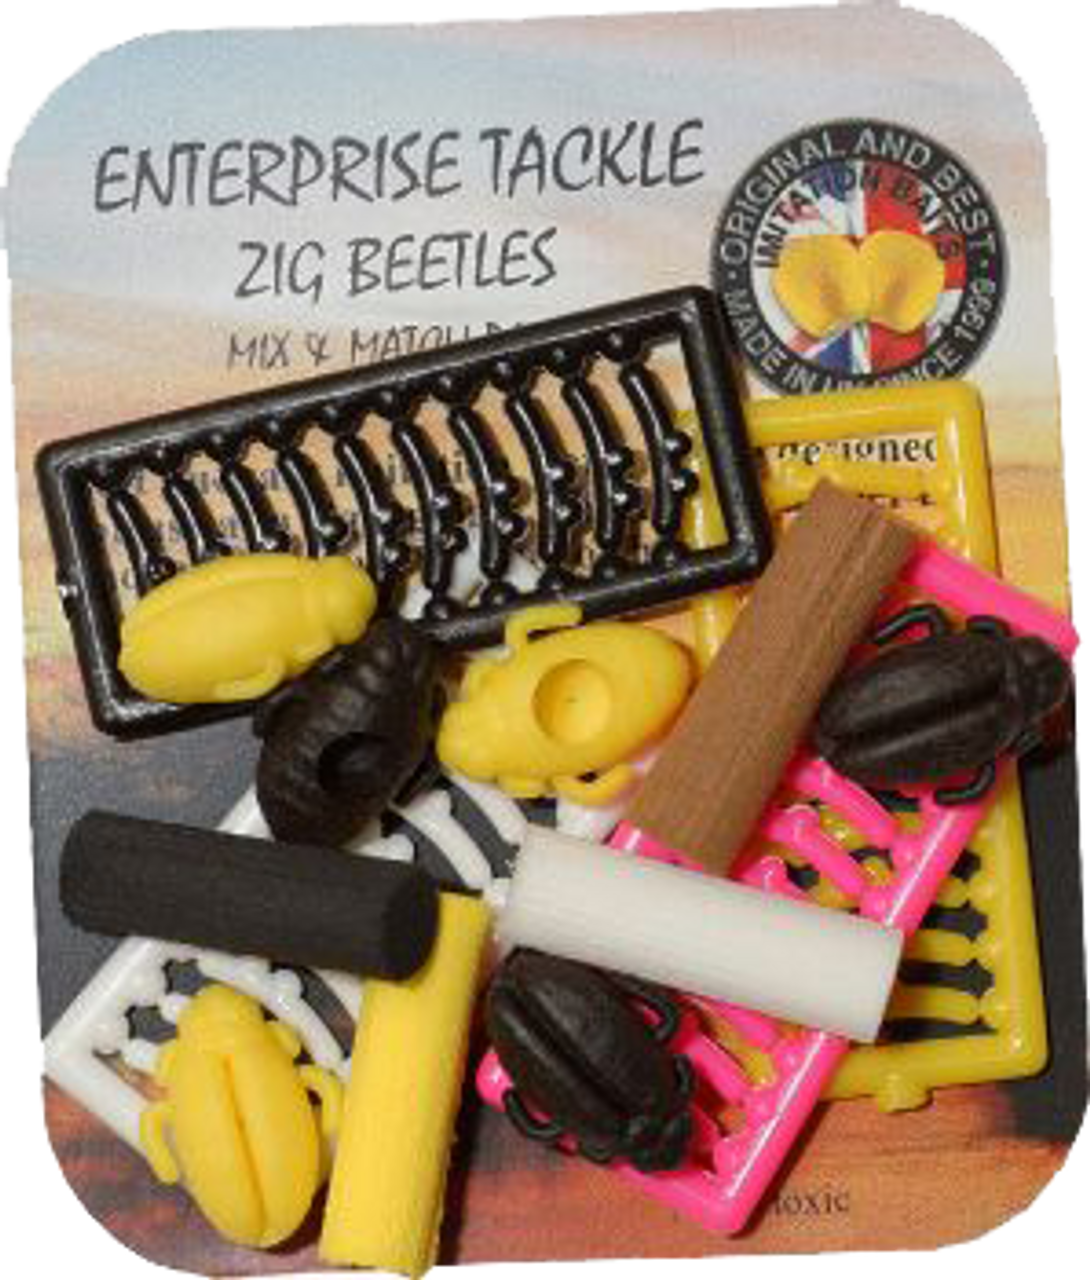 Enterprise tackle zig beetles mix /& match pack 6 st 